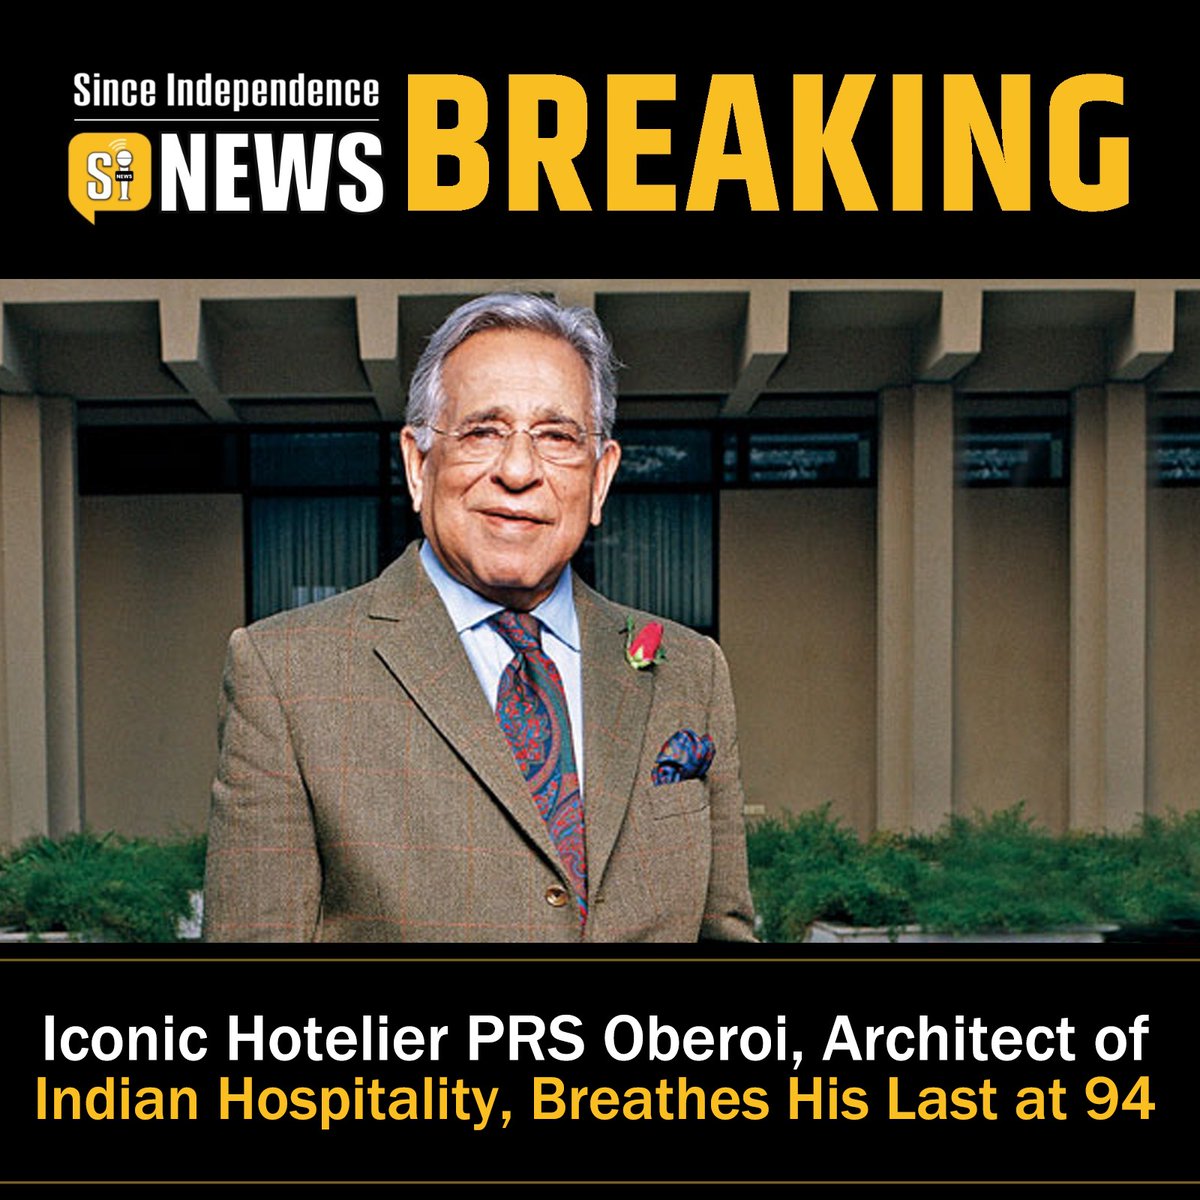 Iconic Hotelier PRS Oberoi, Architect of Indian Hospitality, Breathes His Last at 94 | Since Independence News
#IconicHotelier #PRSOberoi #IndianHospitality #PoliticsToday #BadiKhabar #SpecialReport #BreakingNews #SinceIndependence